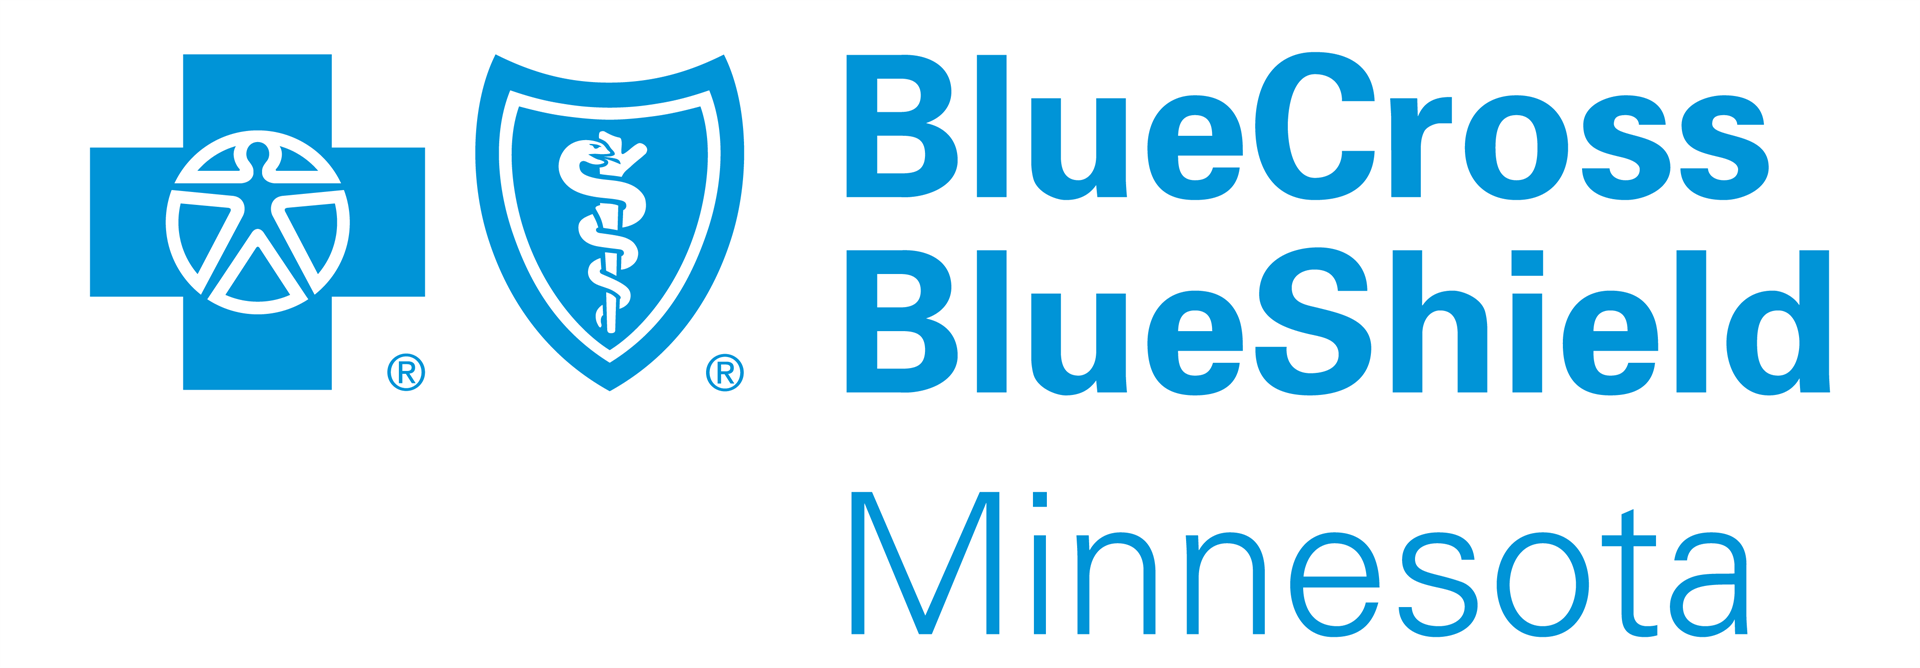 Logo: BlueCross BlueShield Minnesota